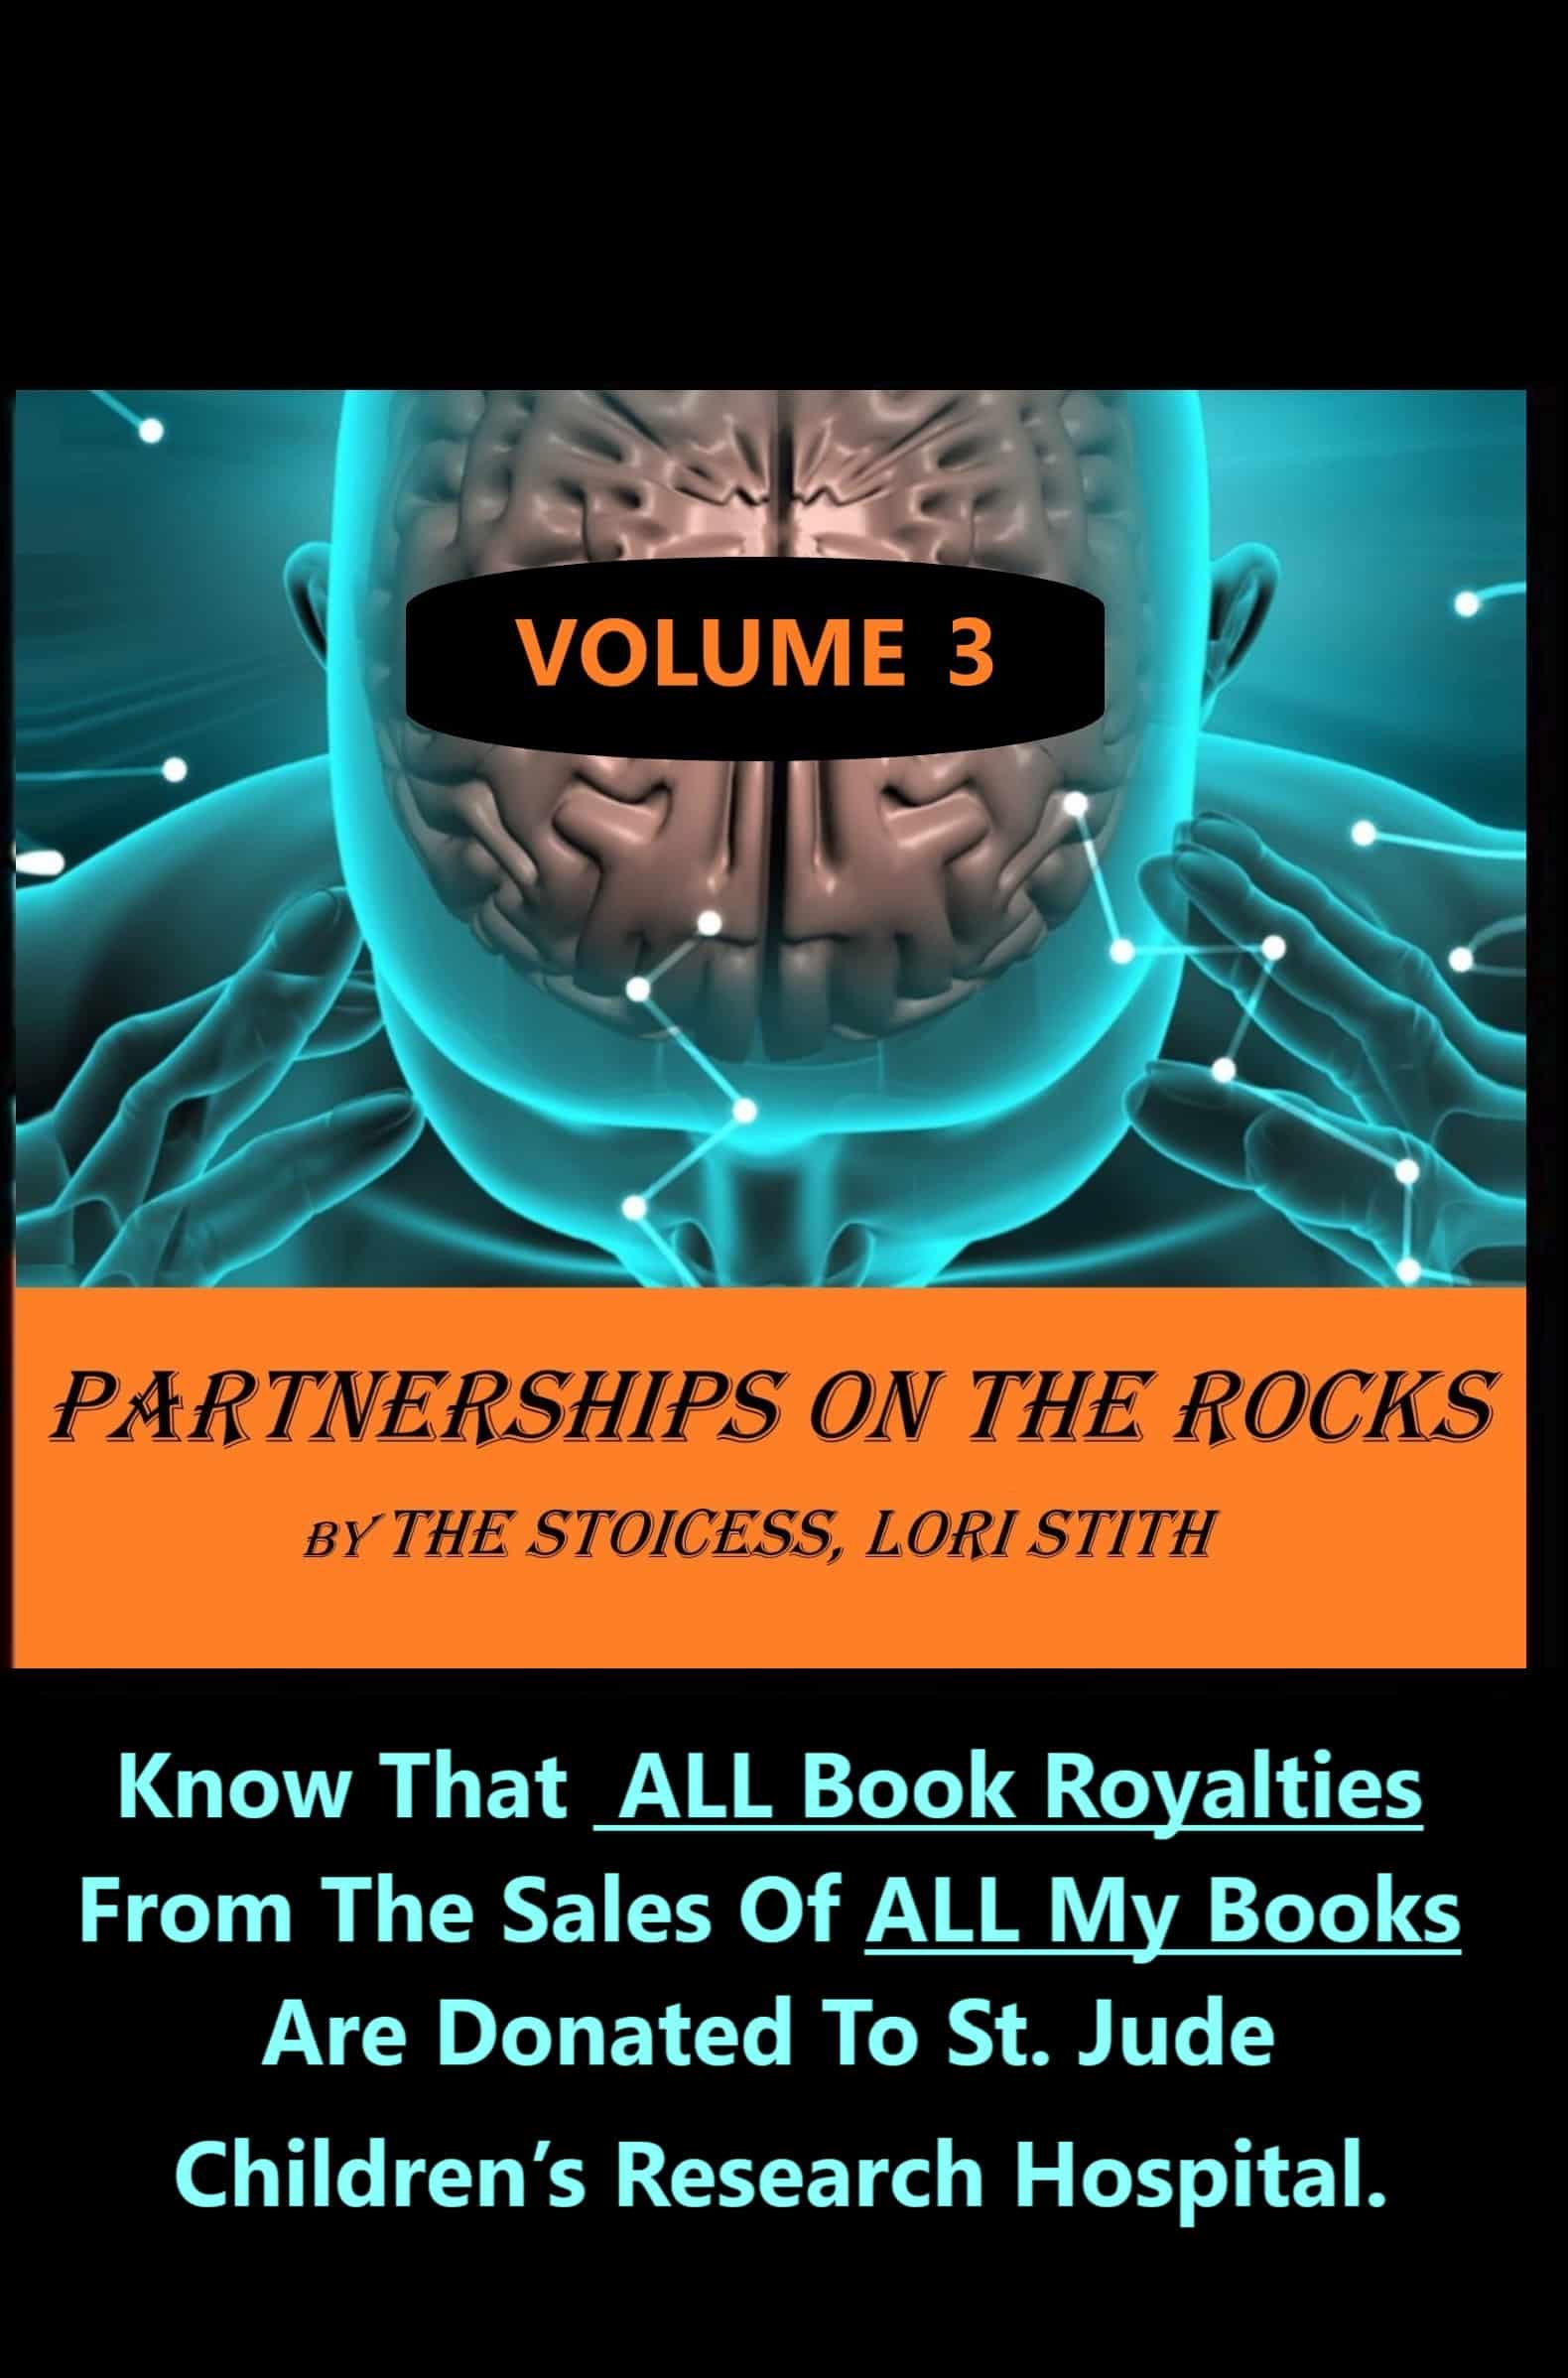 “Partnerships on the Rocks: Vol 3